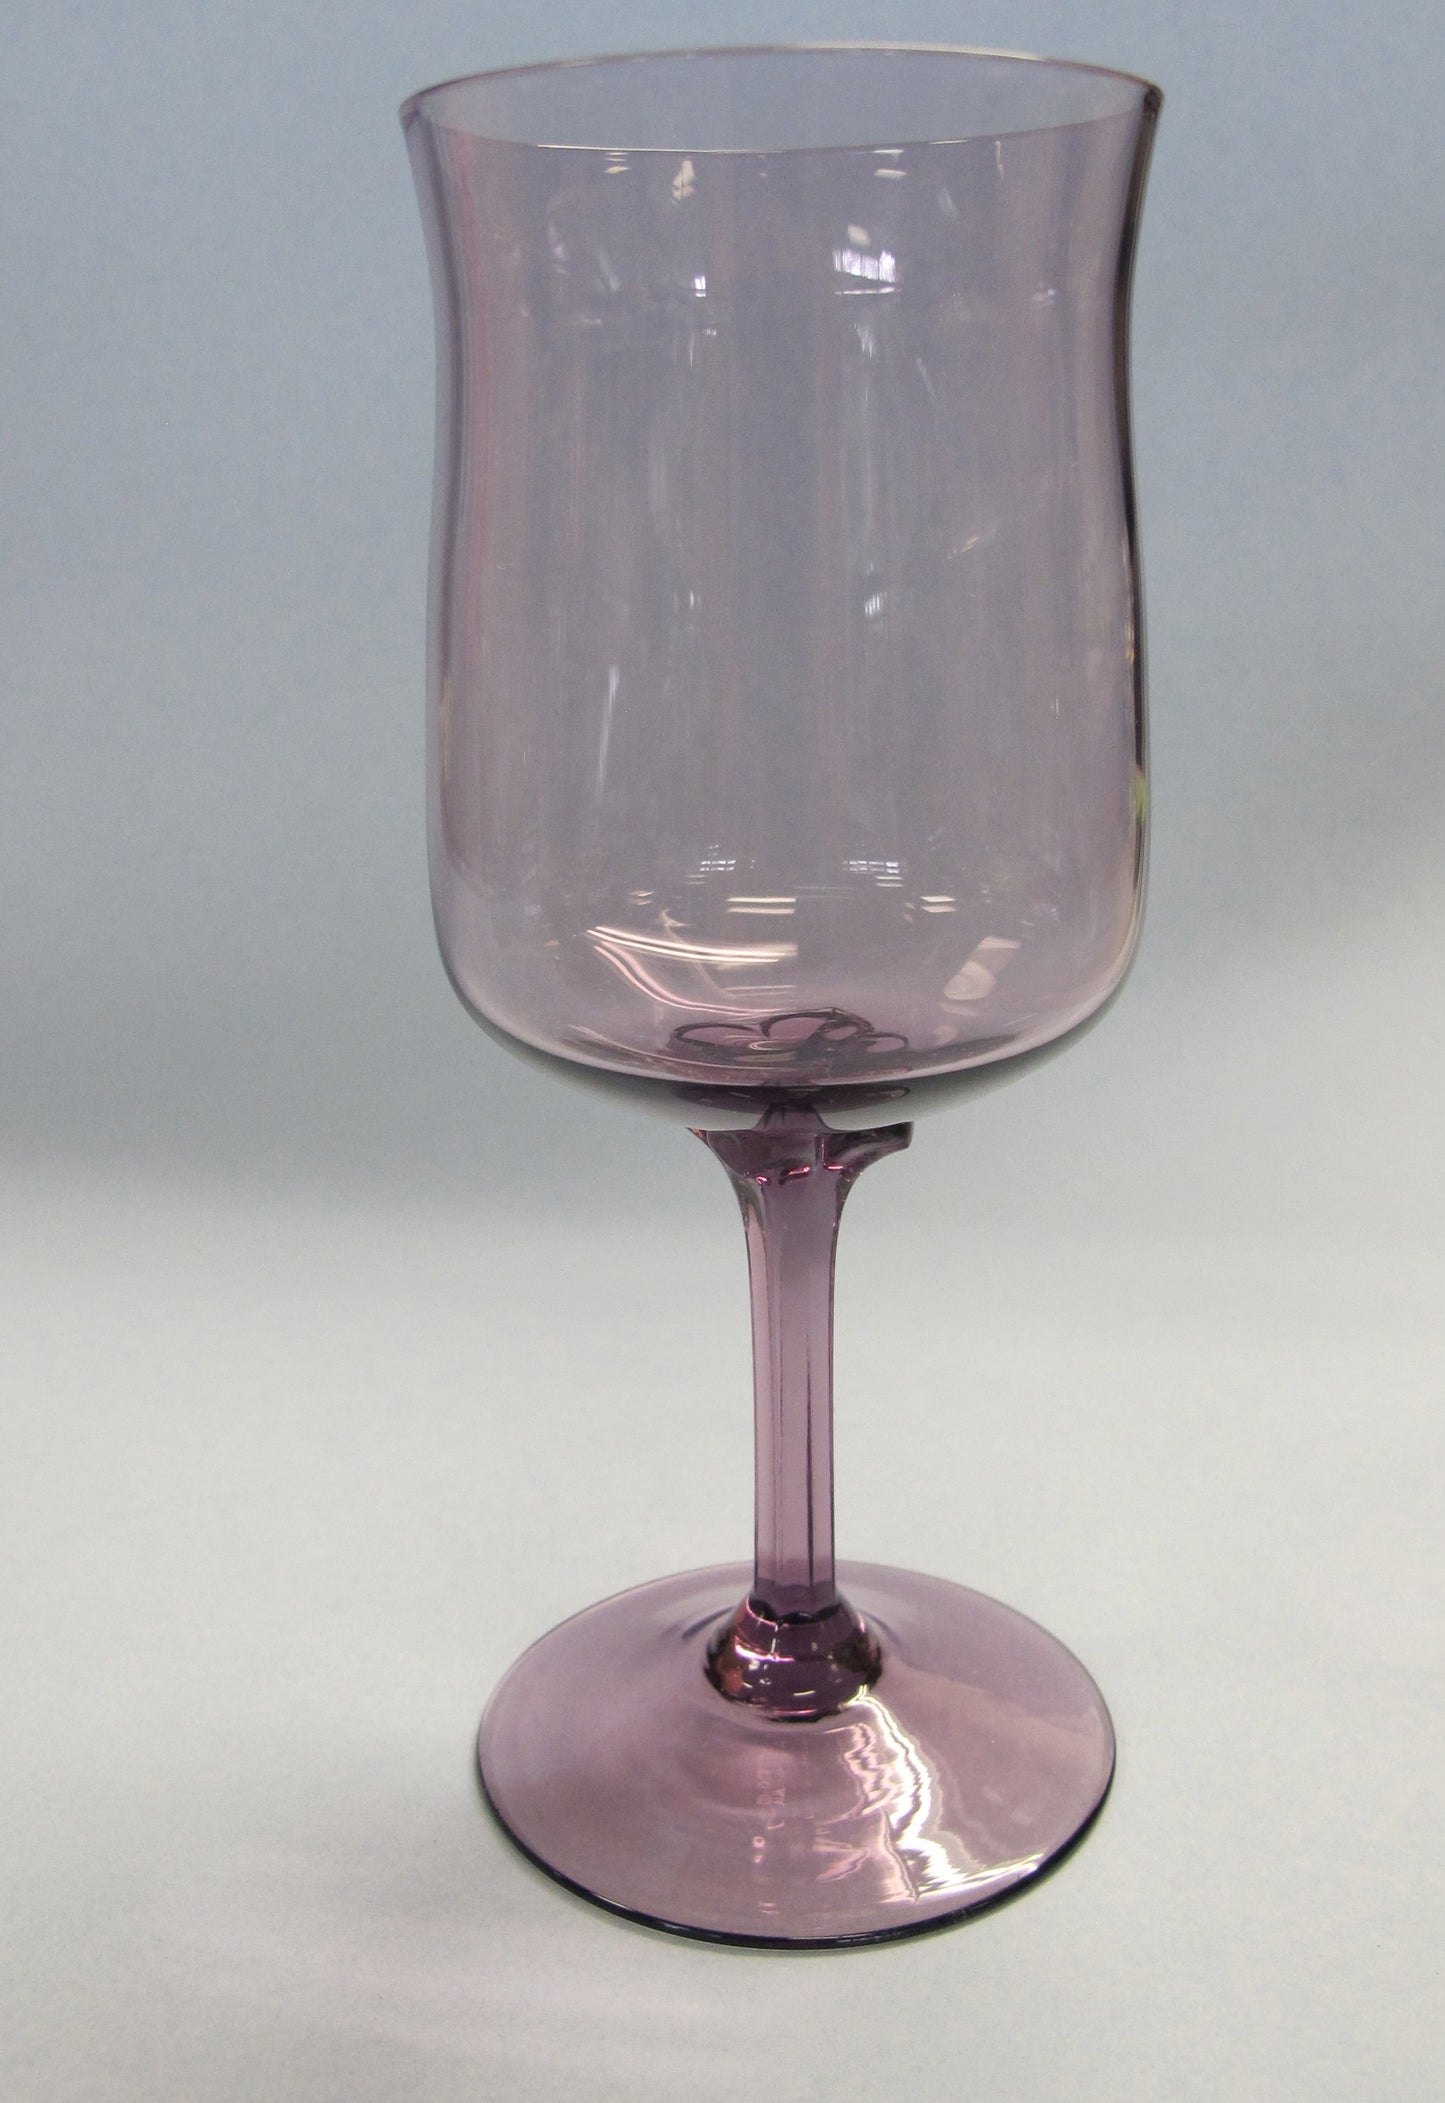 Lenox Amathest wine glass Lilac Mist - O'Rourke crystal awards & gifts abp cut glass